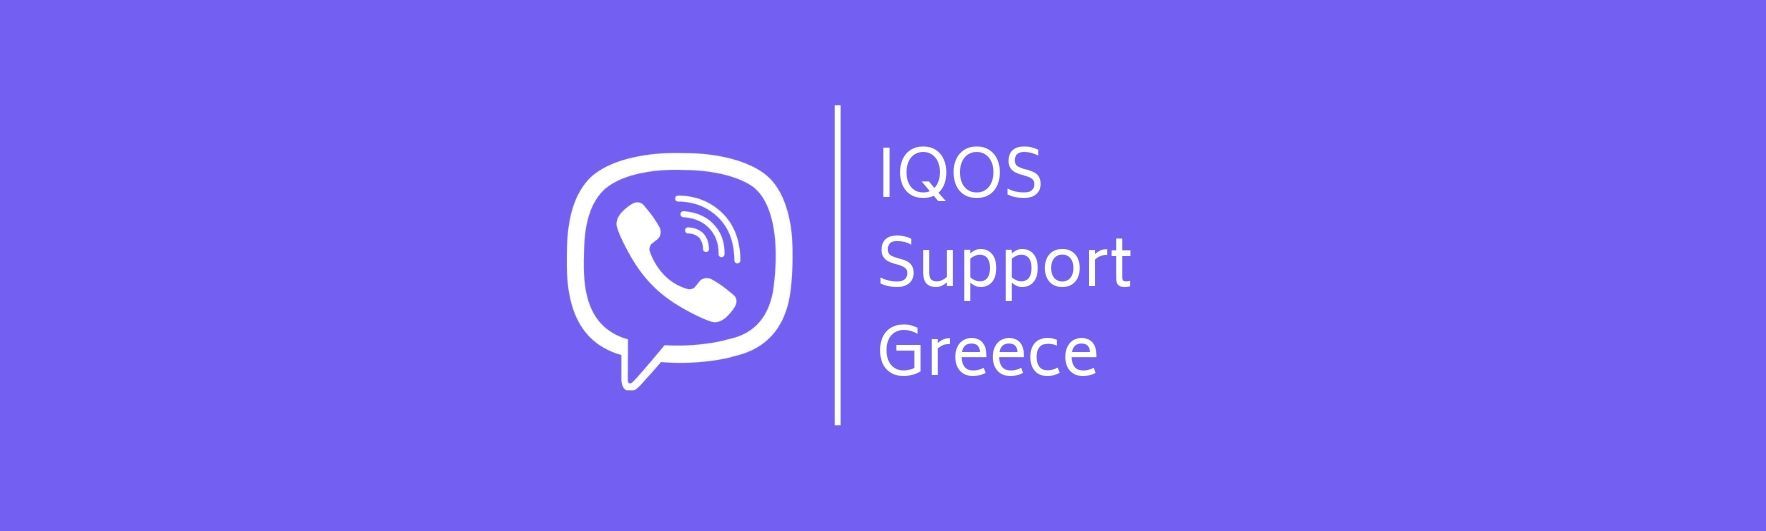 IQOS Care Team Greece on Viber